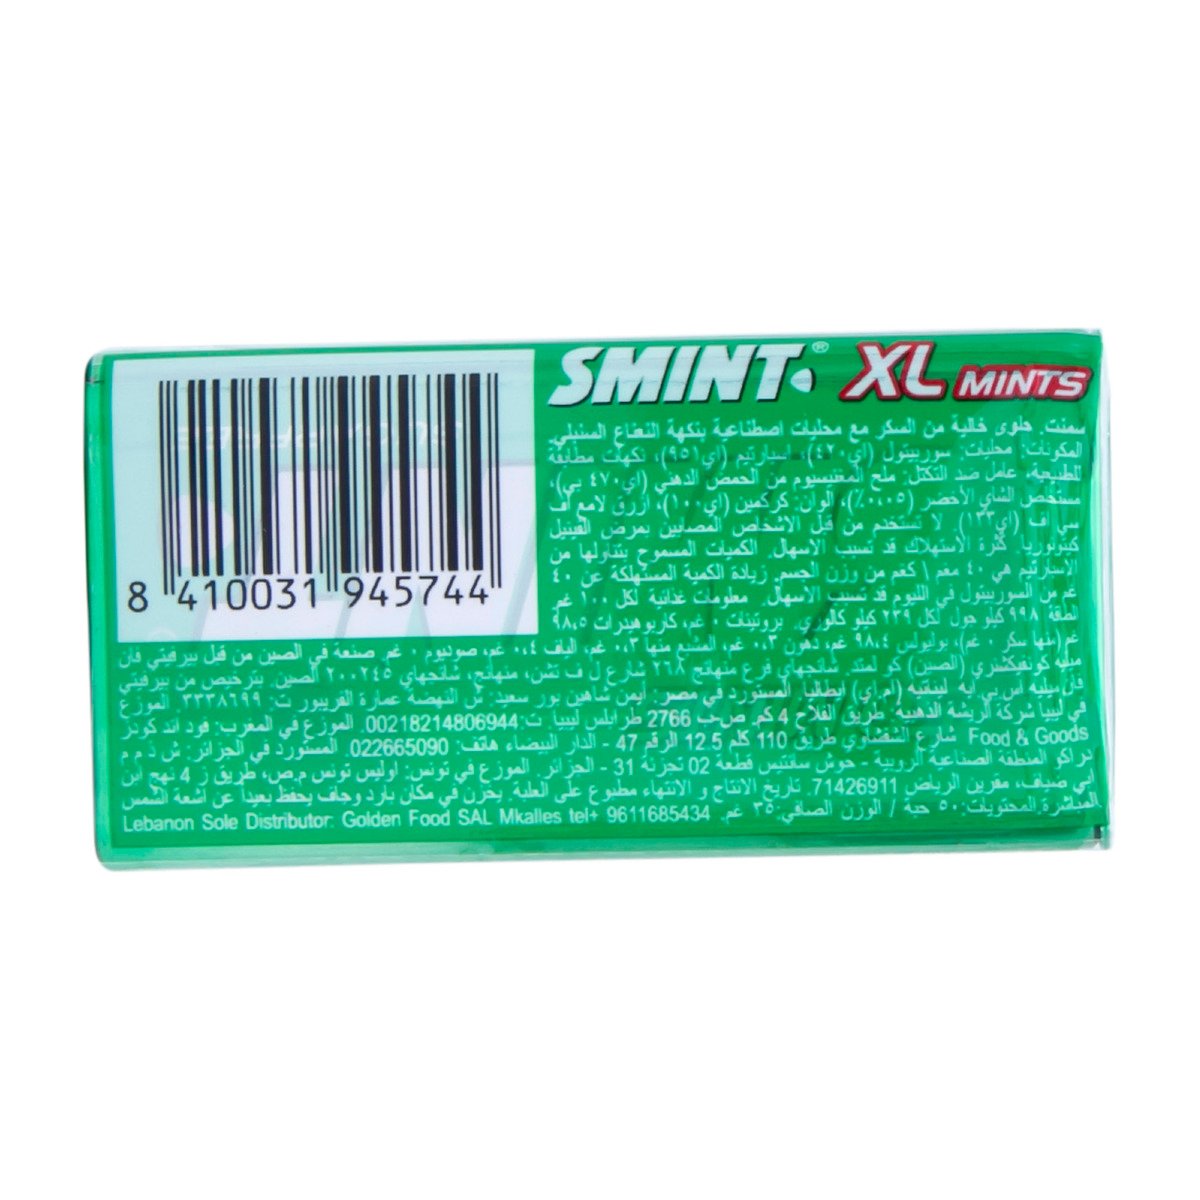 Smint Sugar Free Spearmint Flavour Breath Freshener Mints 35 g